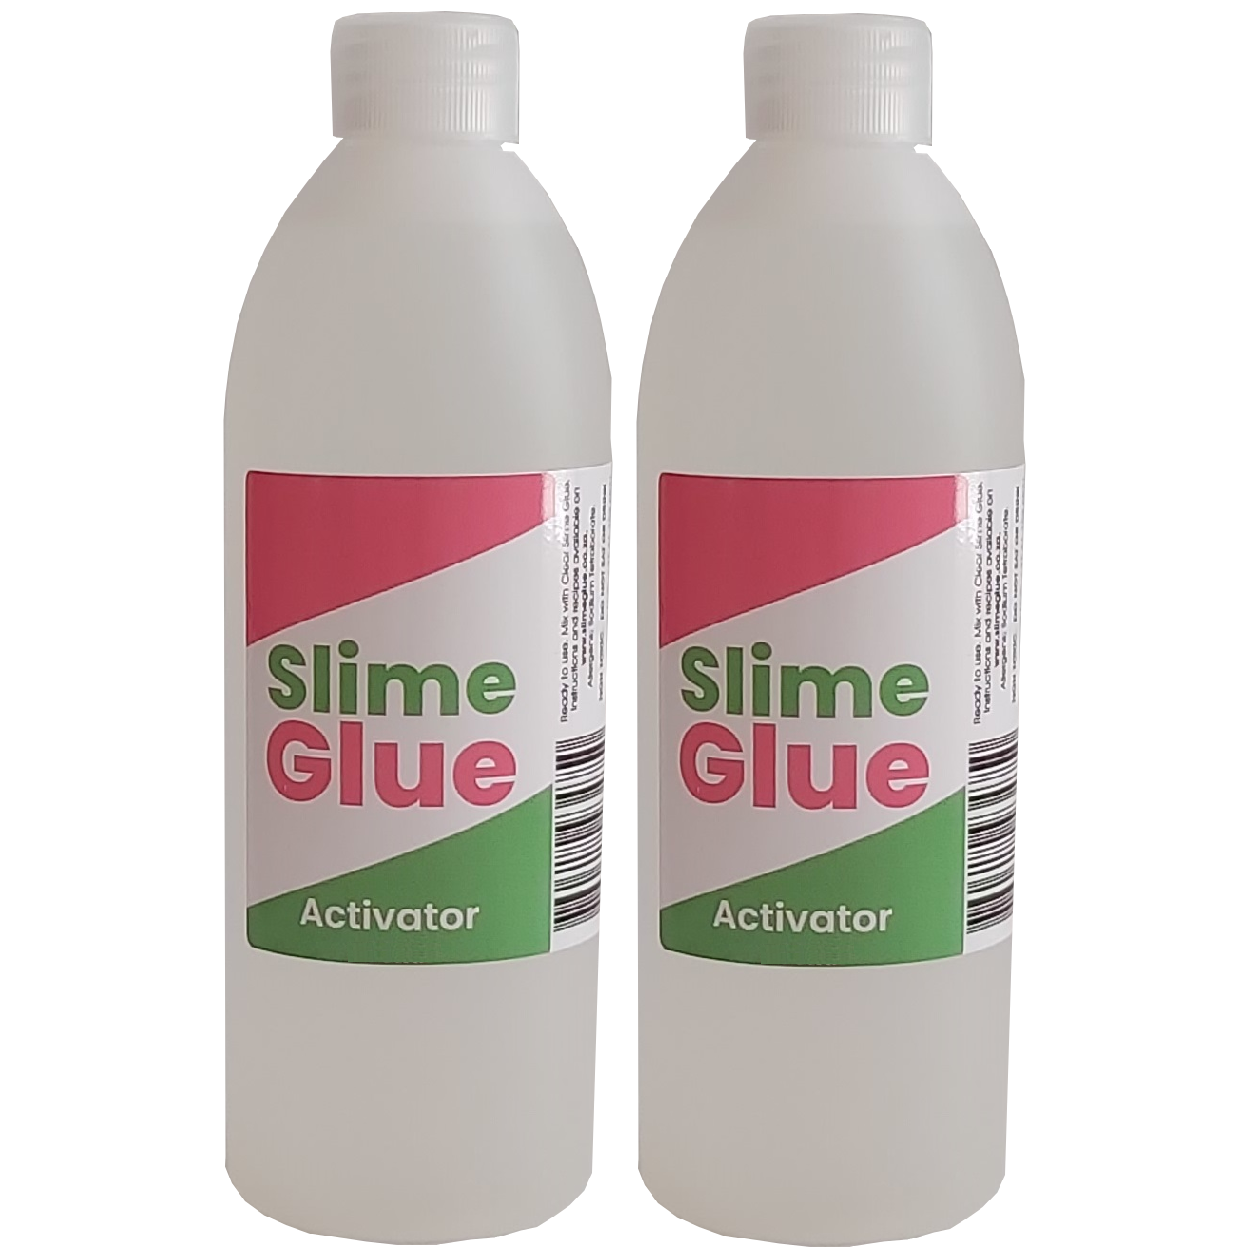 Slime Glue South Africa